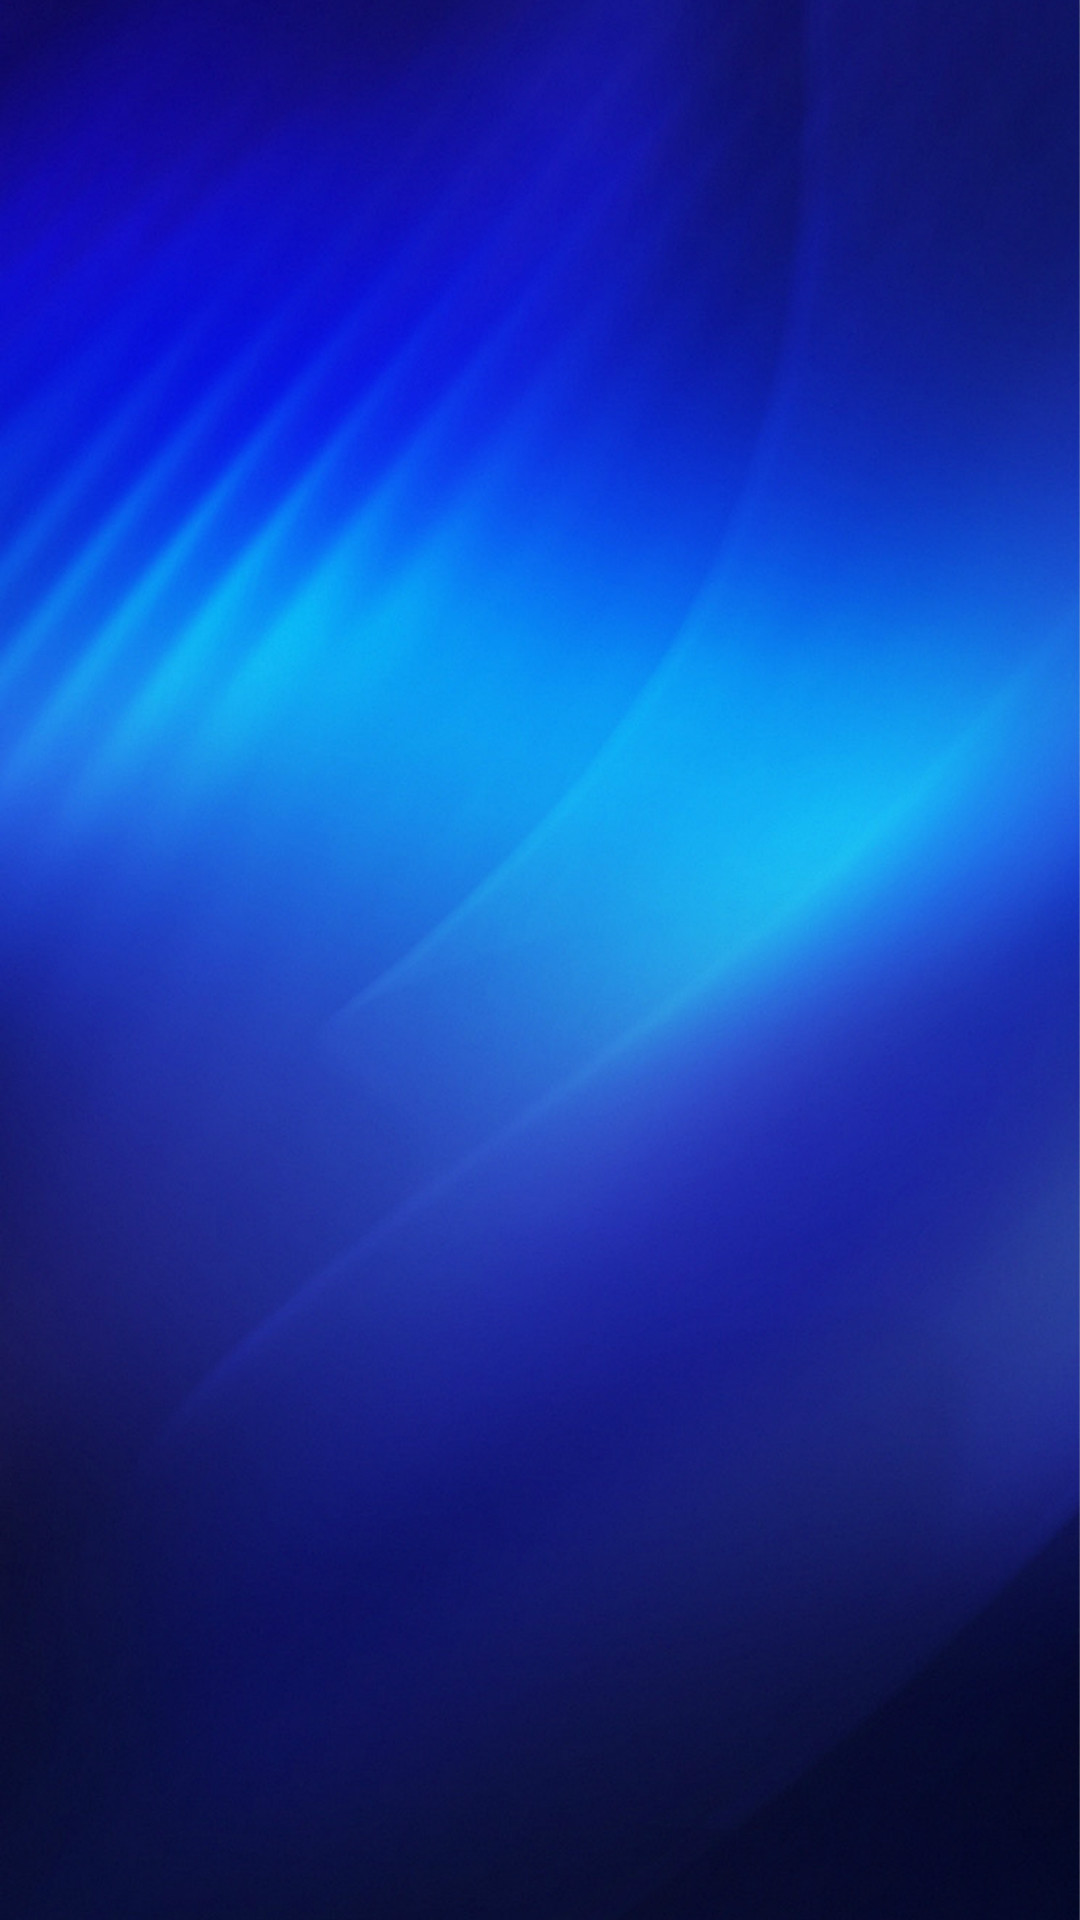 1080x1920 Abstract Blue Light Pattern iPhone 6 wallpaper